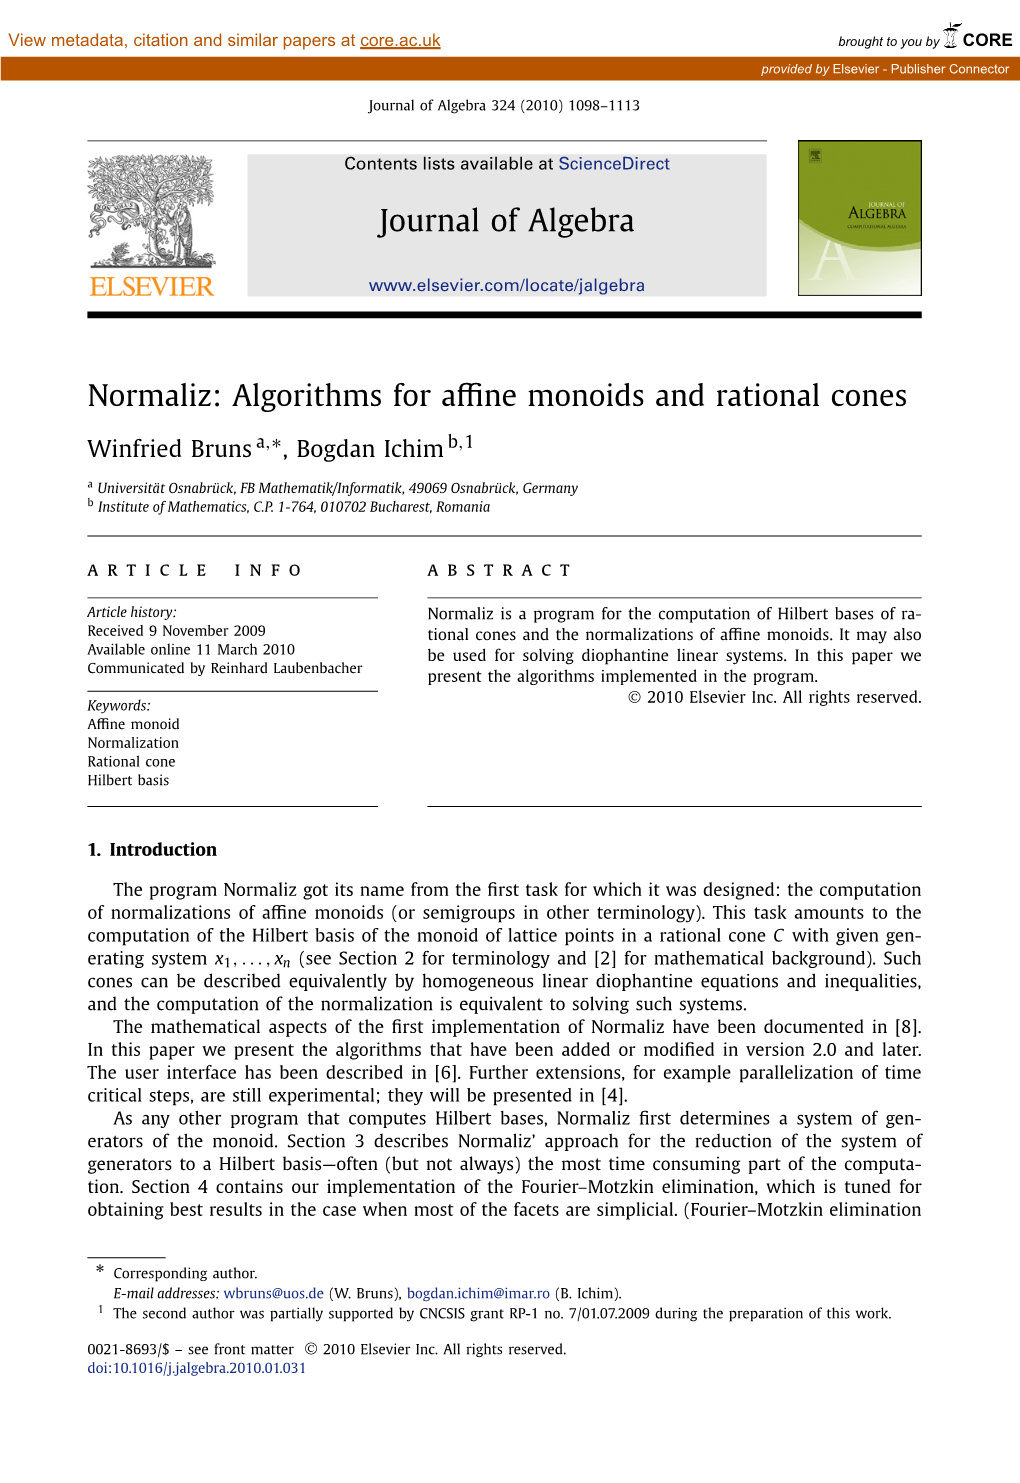 Normaliz: Algorithms for Affine Monoids and Rational Cones